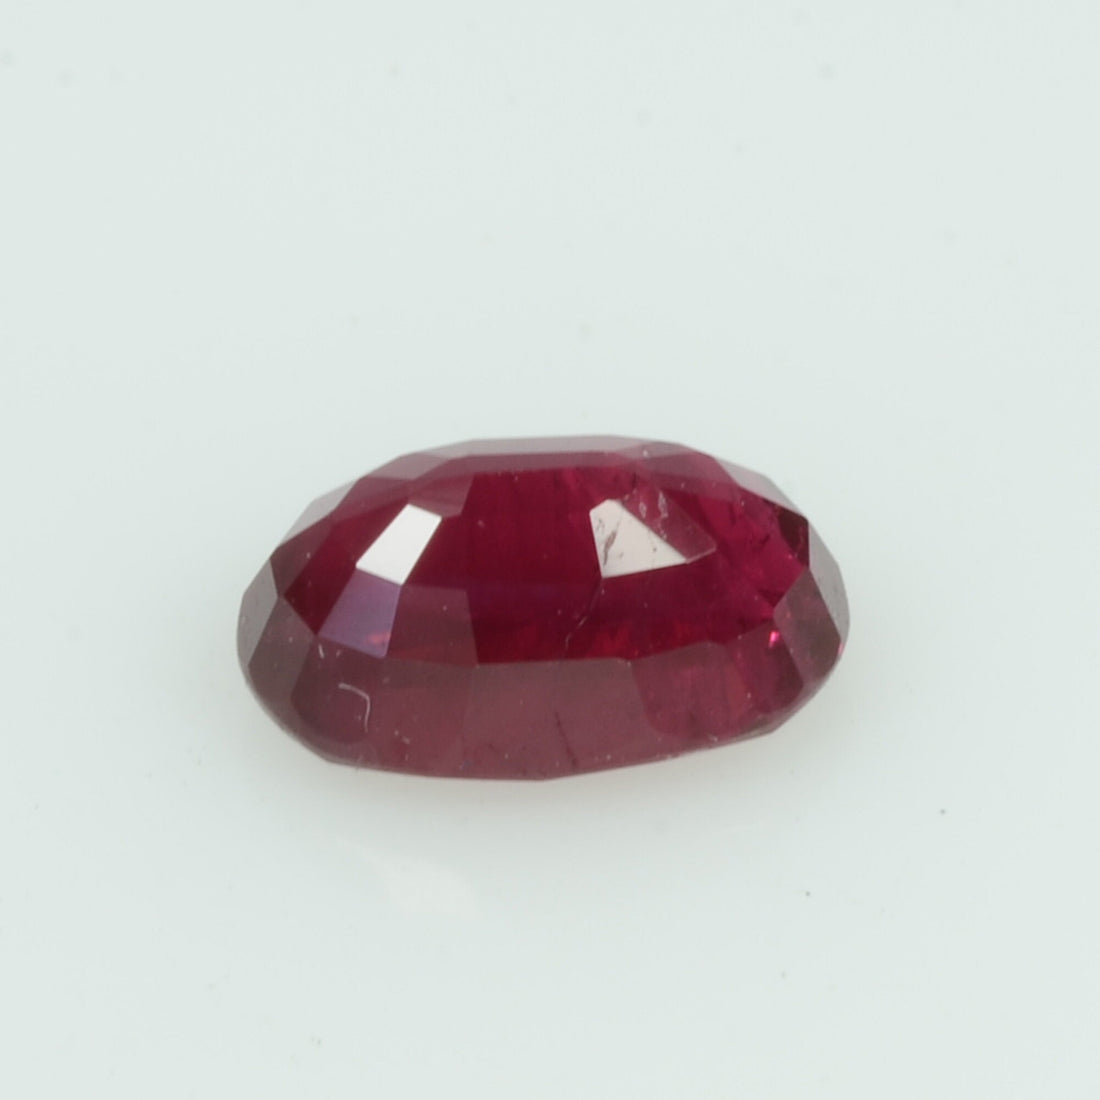 0.99 Cts Natural Burma Ruby Loose Gemstone Oval Cut